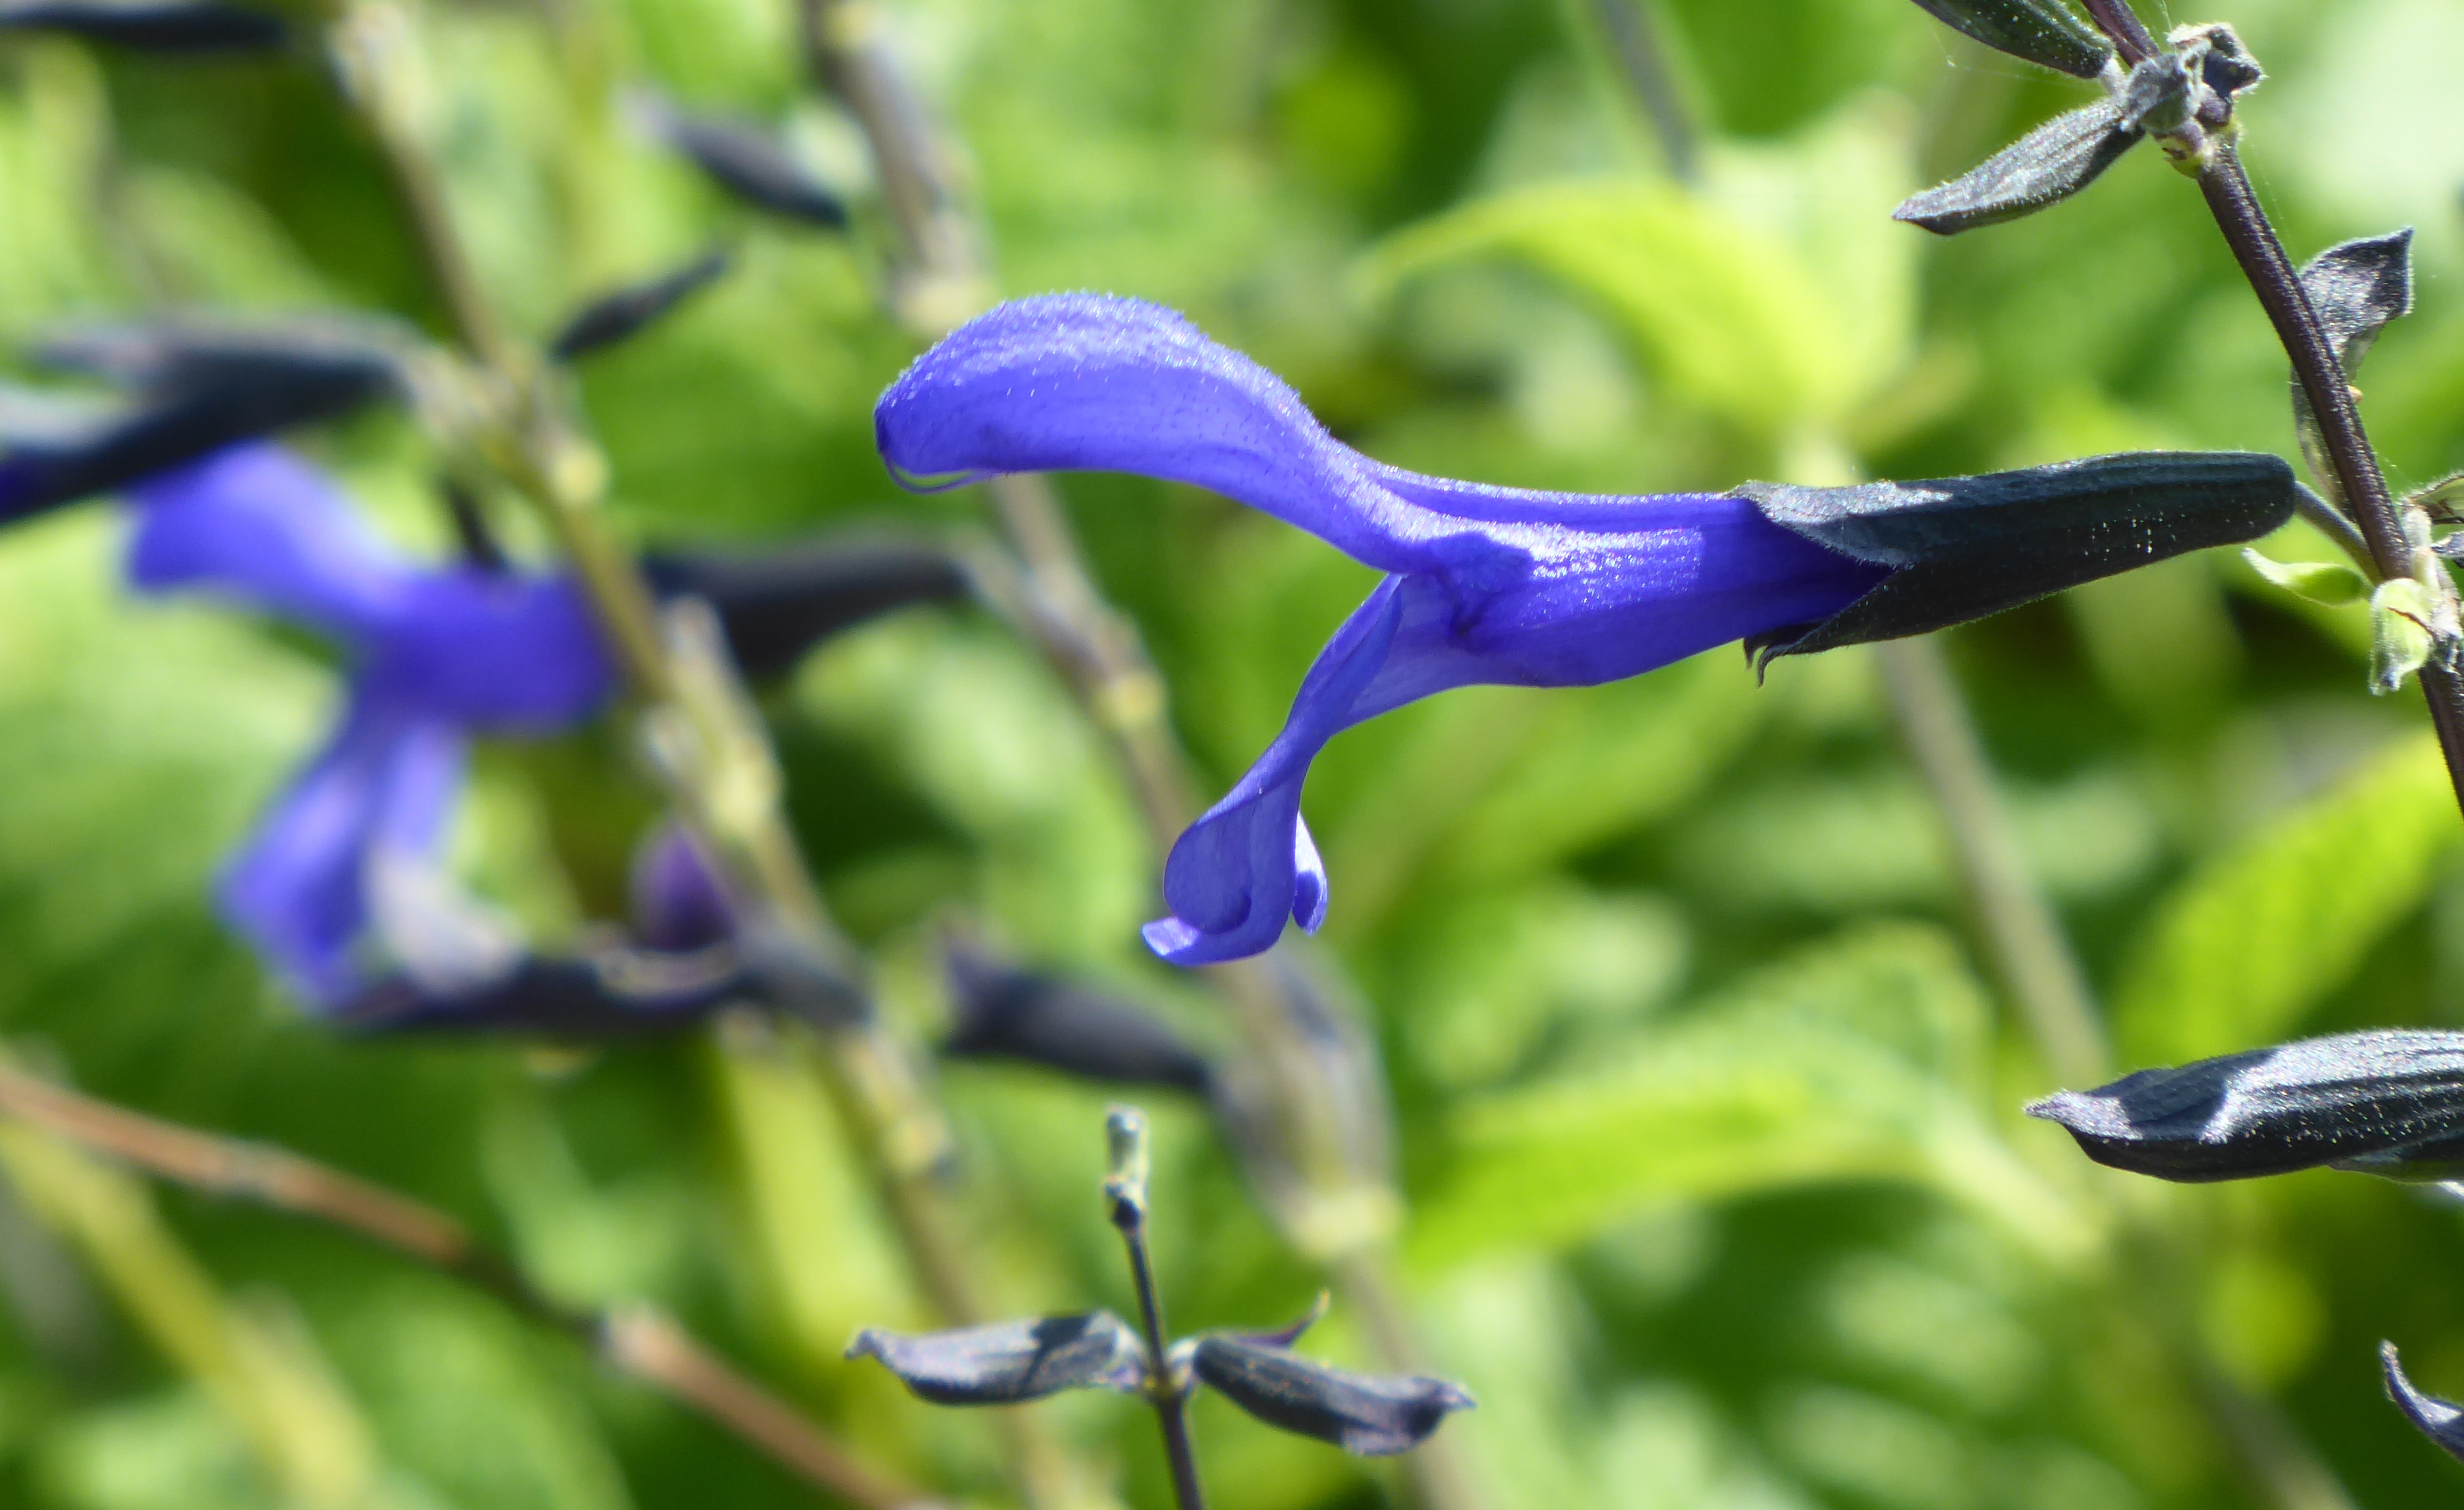 Black & Blue - Salvia guaranitica